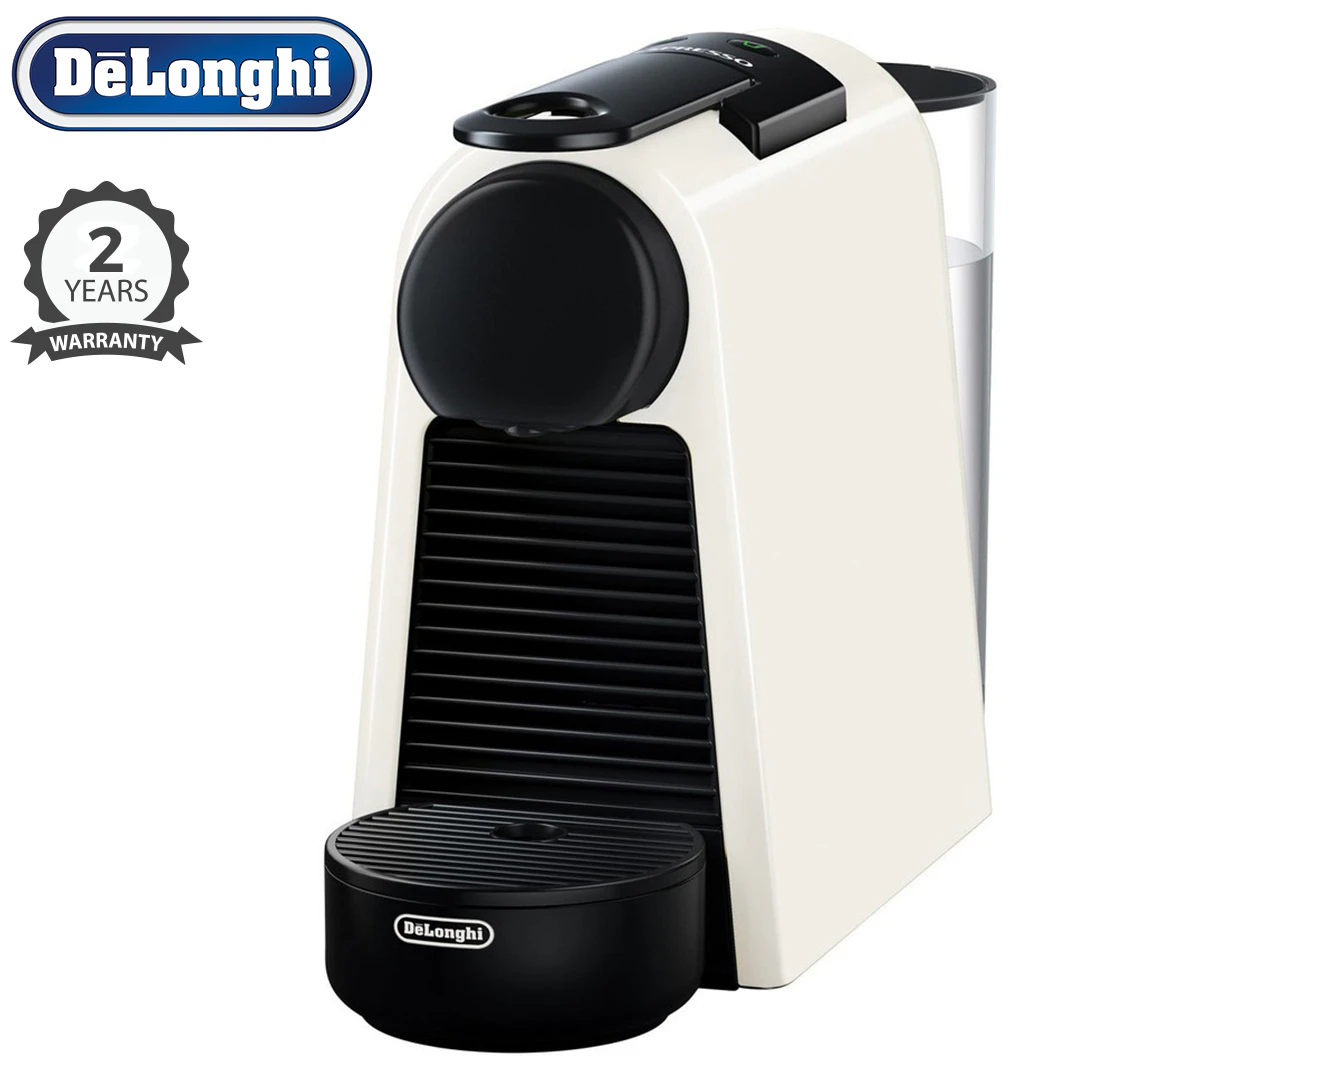 DeLonghi IdealFry Digital Air Fryer FH2394BK